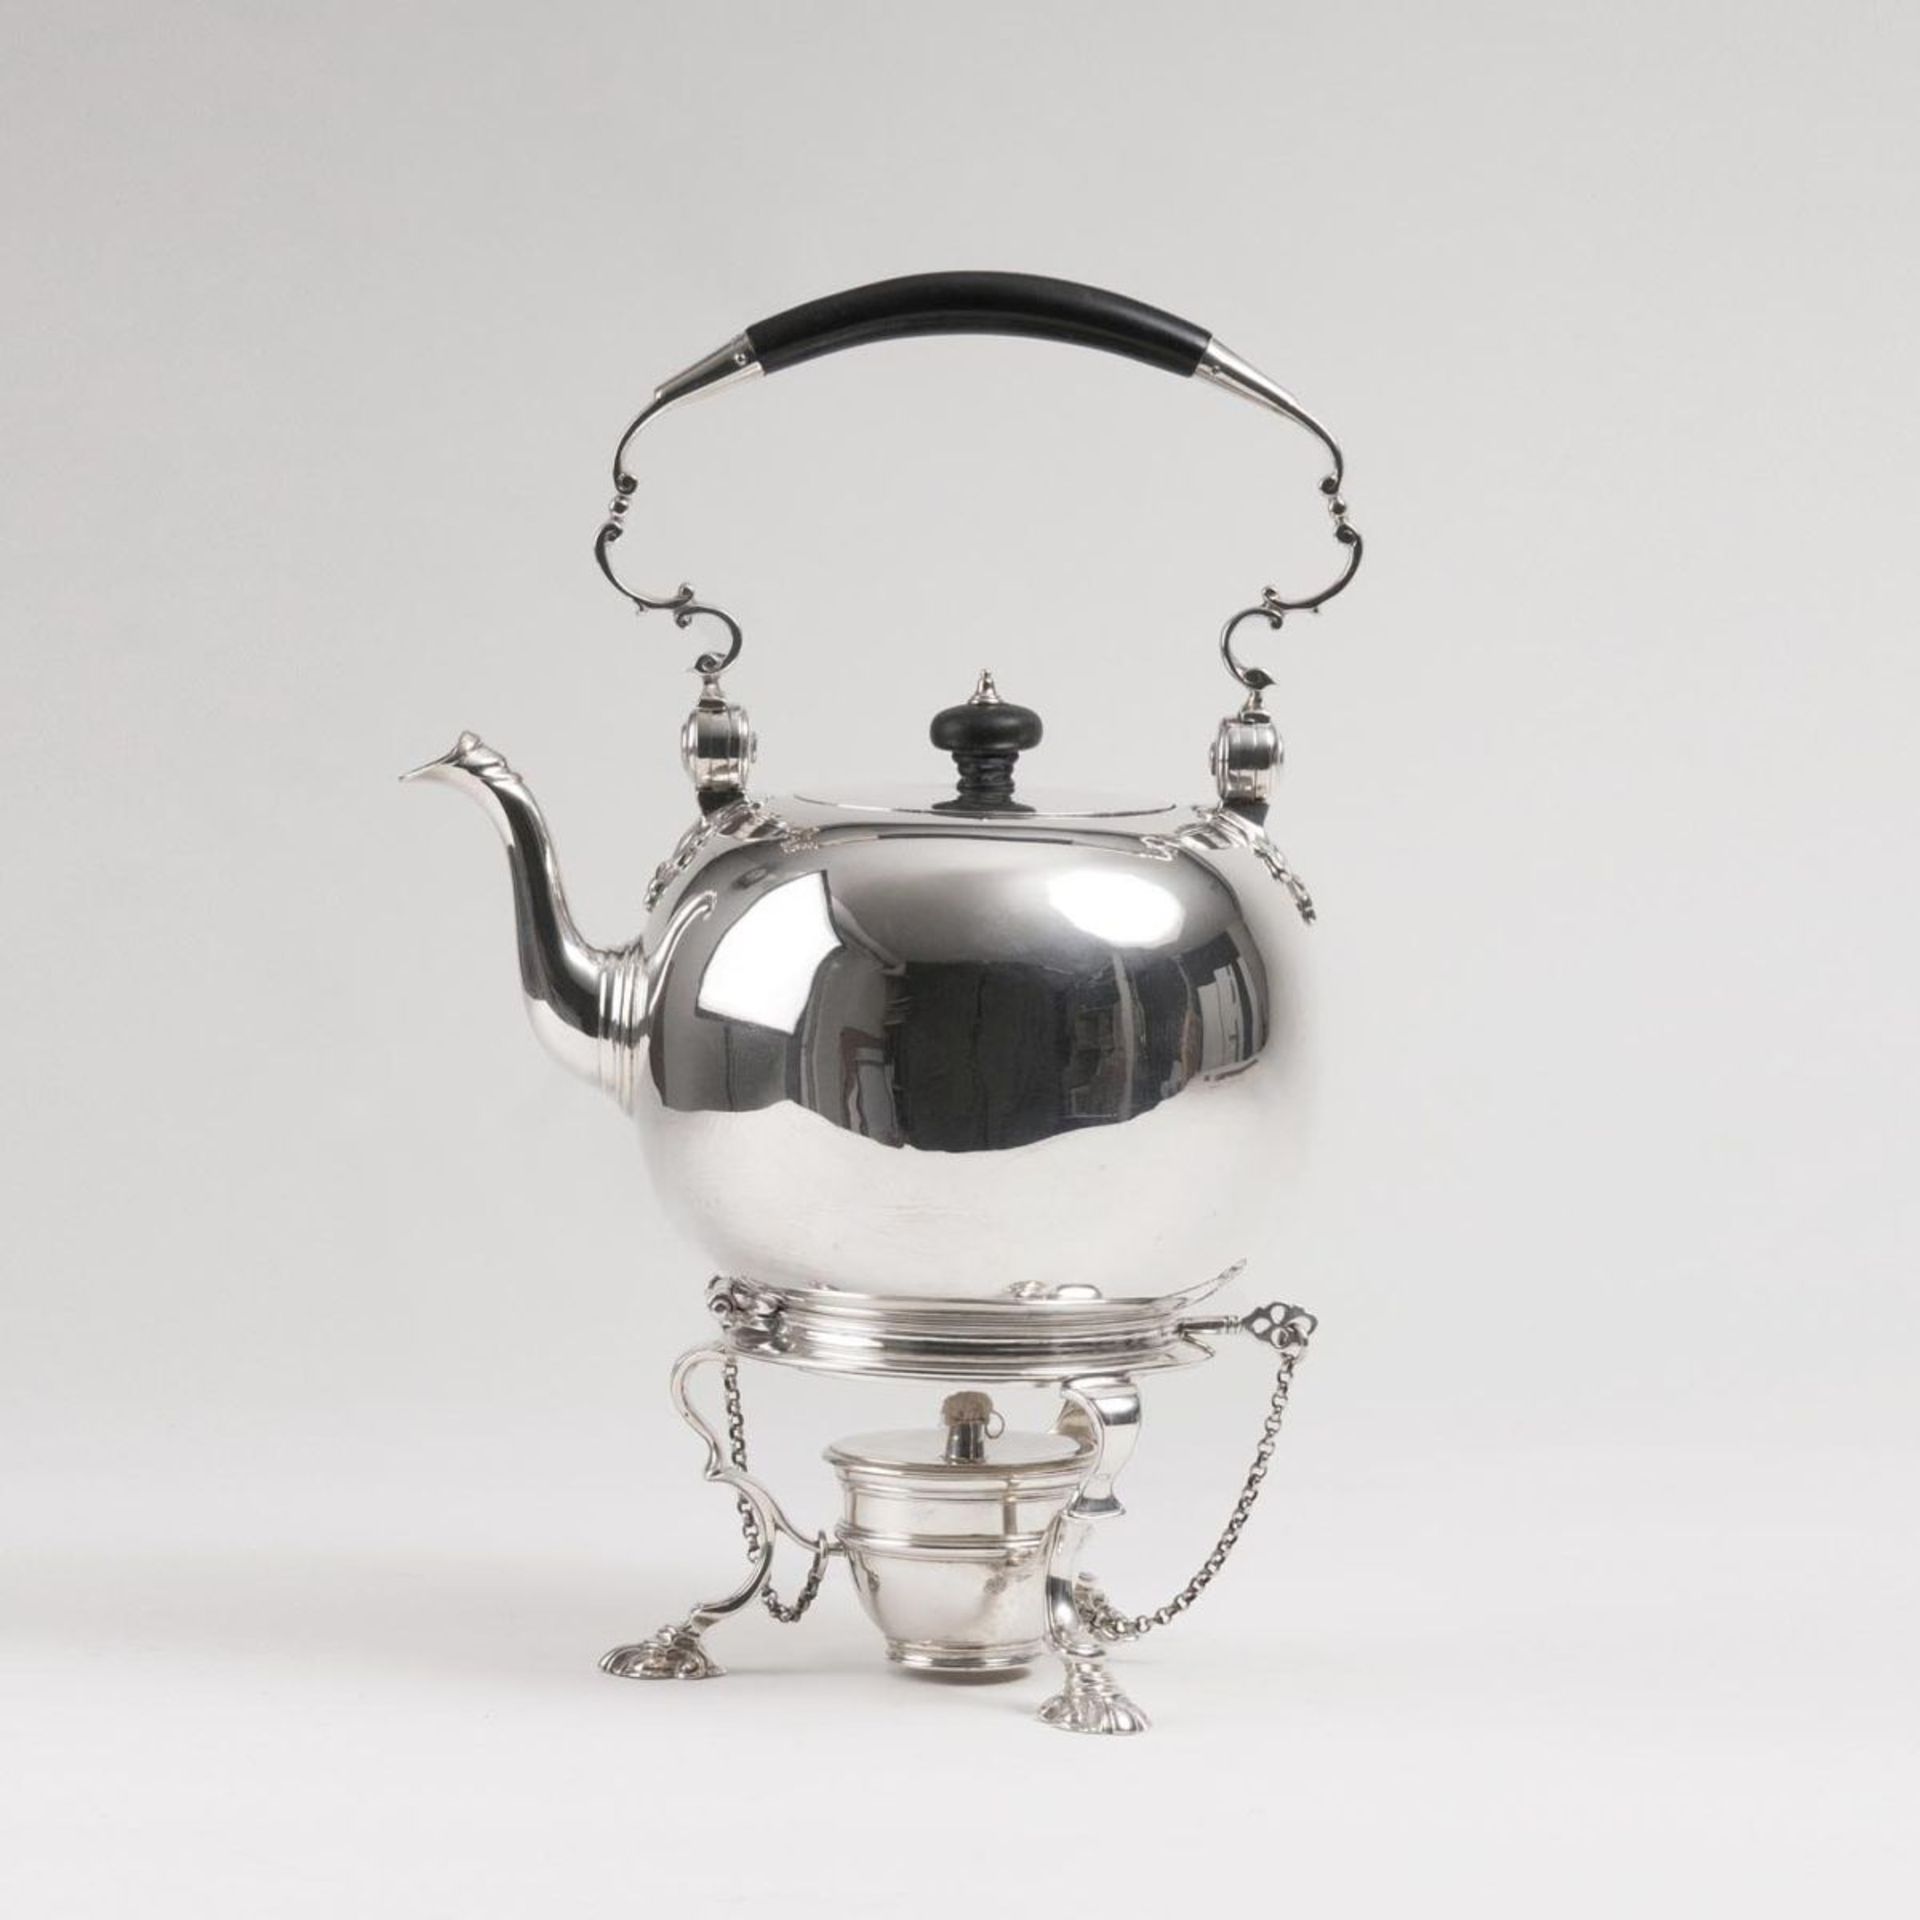 Goldsmiths & Silversmiths Co. (William Gibson & John L. Langman)reg. 1890A Victorian Teapot on